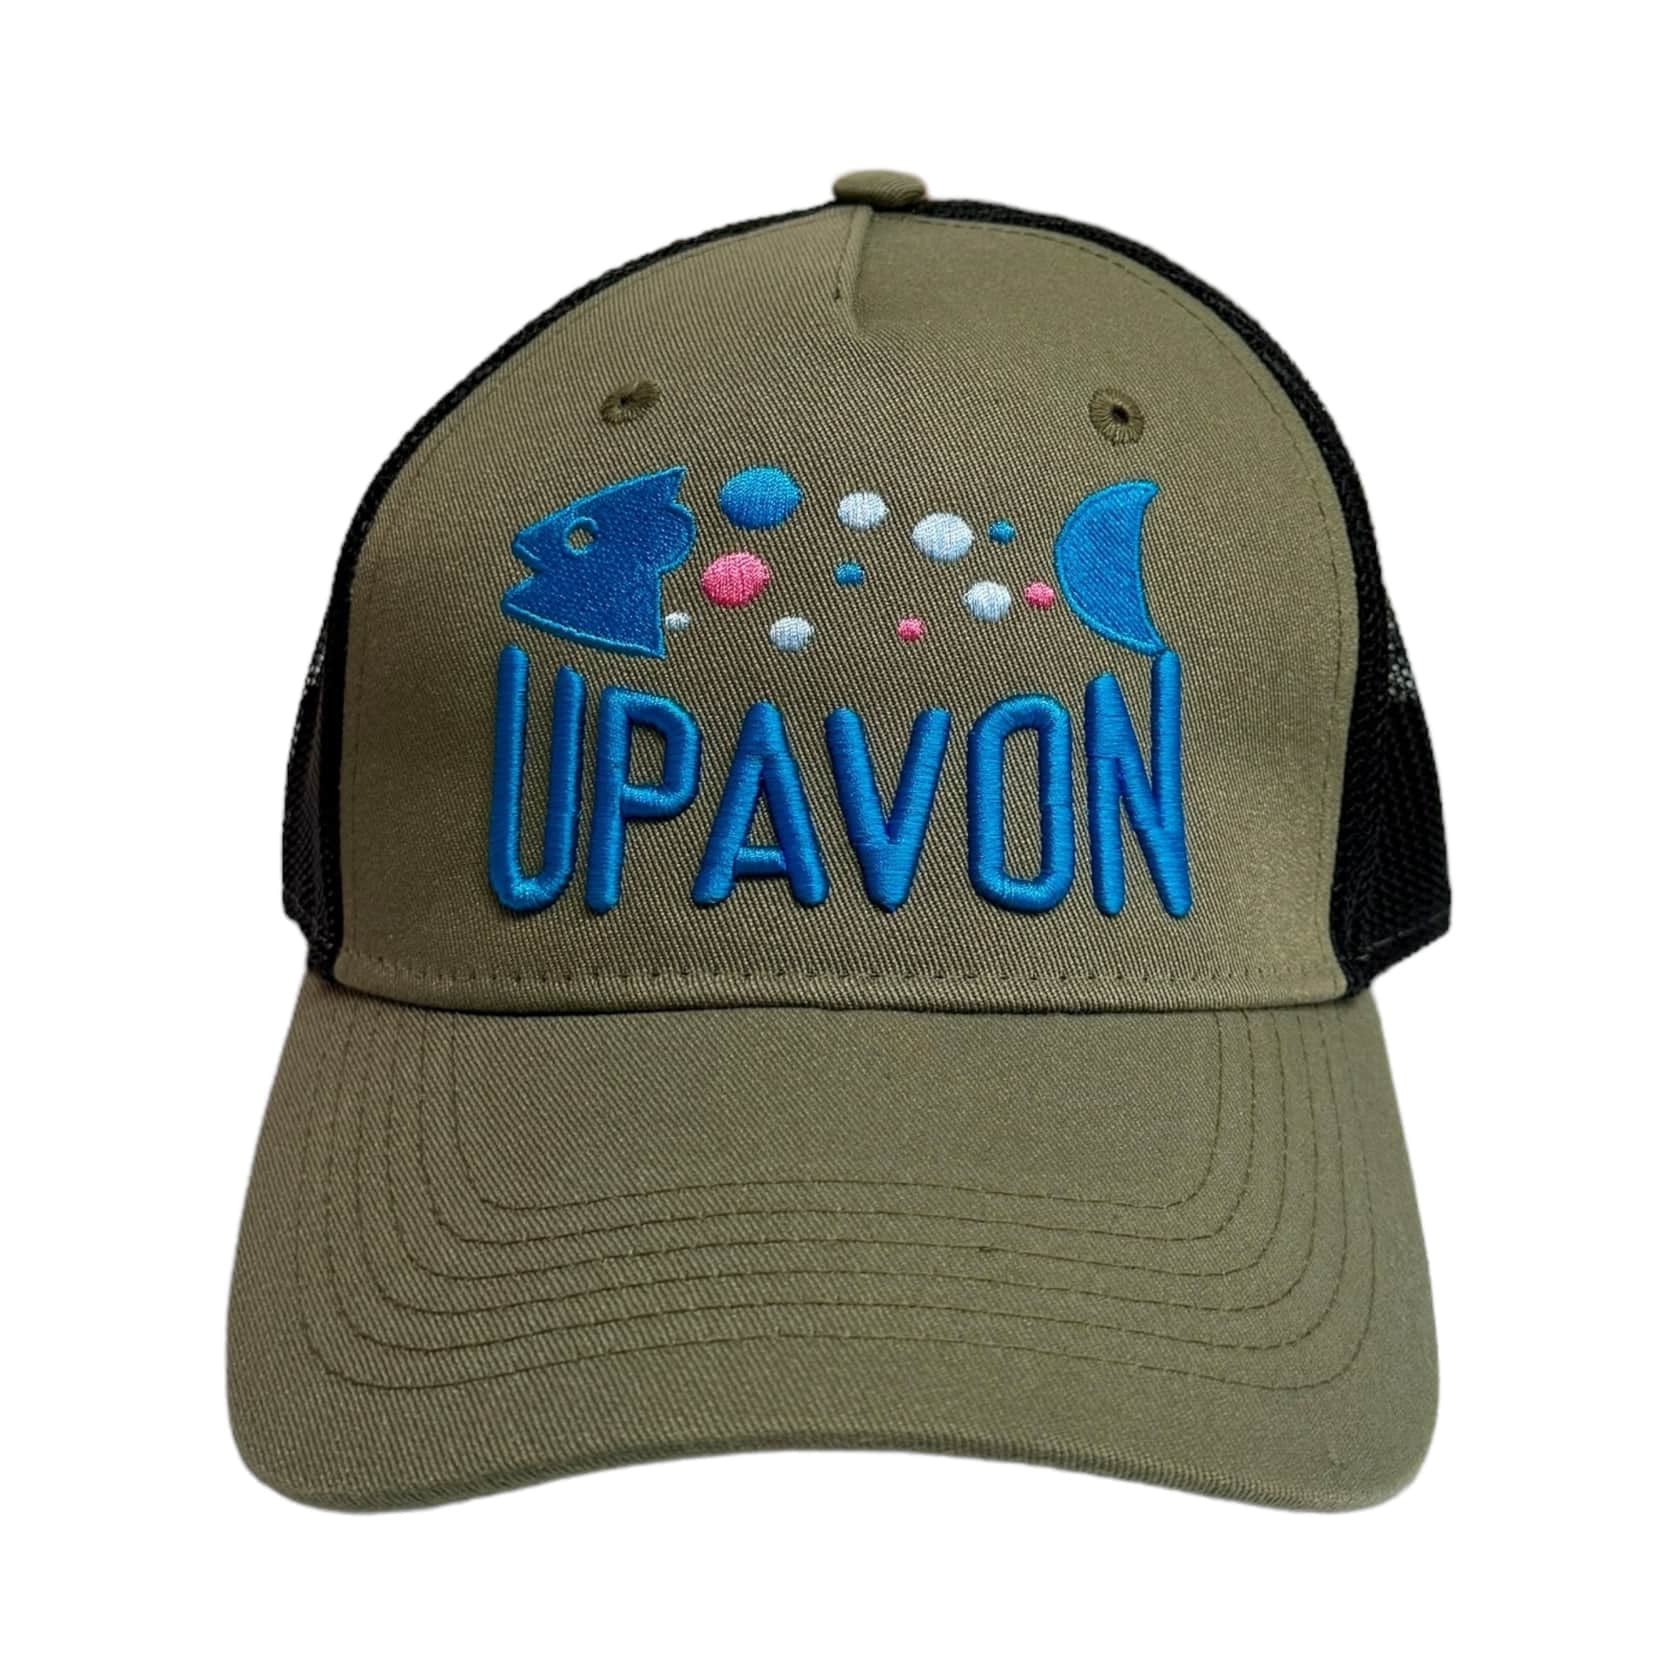 Upavon Eco 3D Trucker Caps - Upavon Fly Fishing